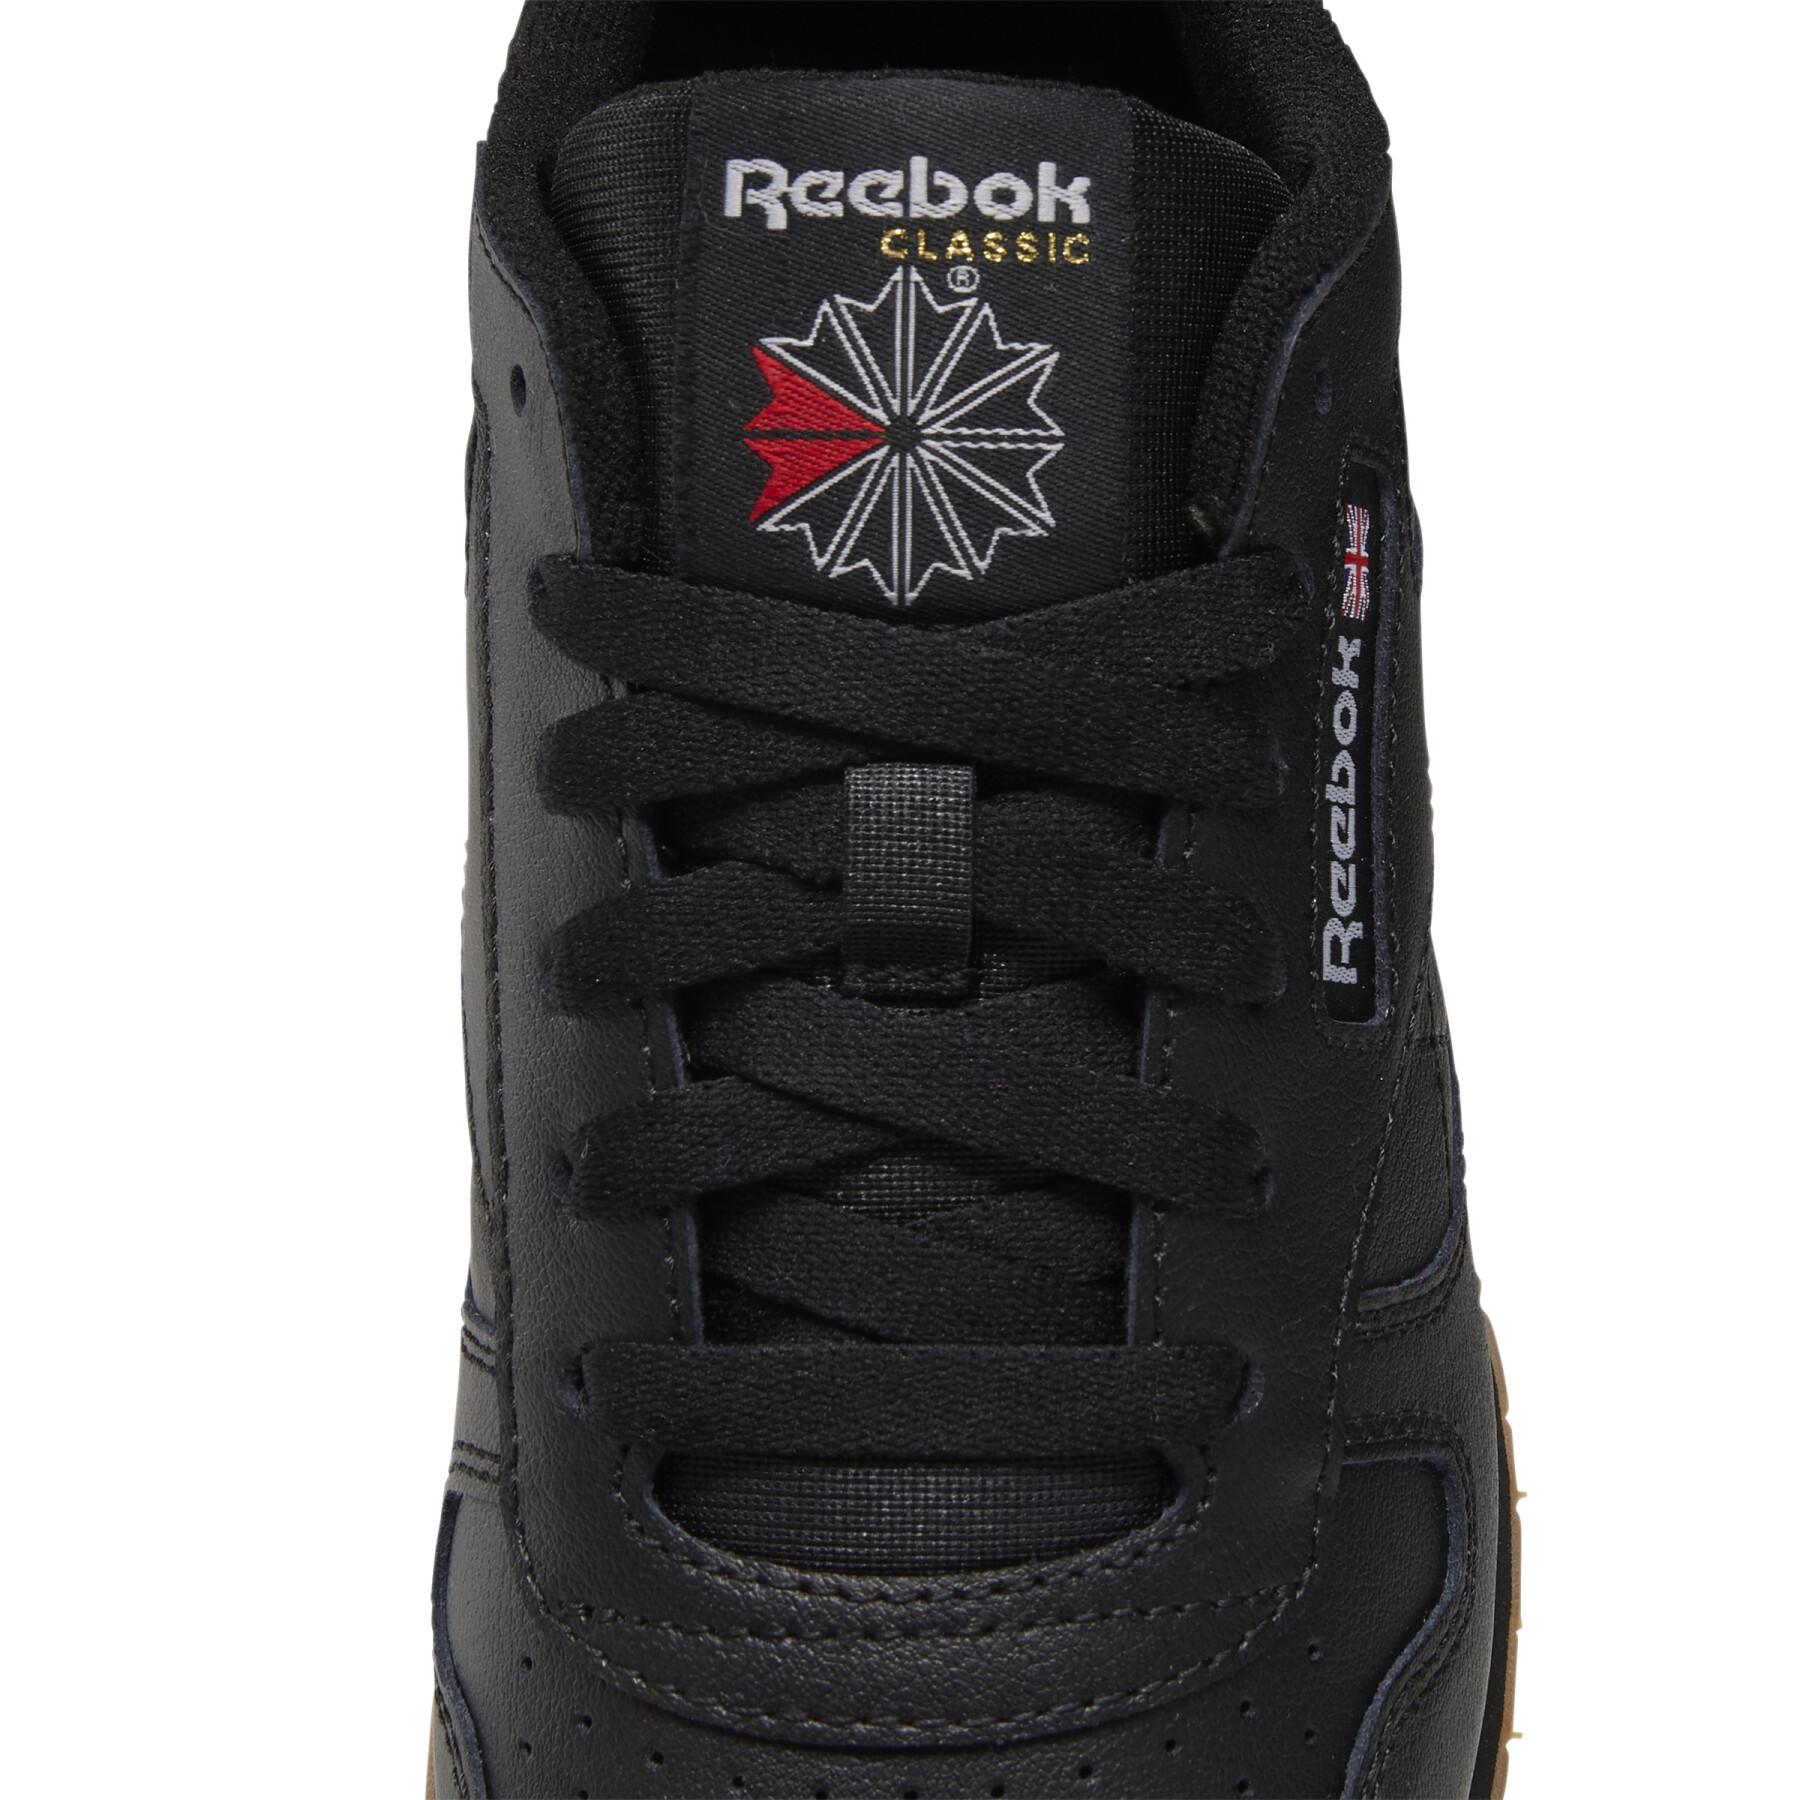 Skor för barn Reebok Classic Leather